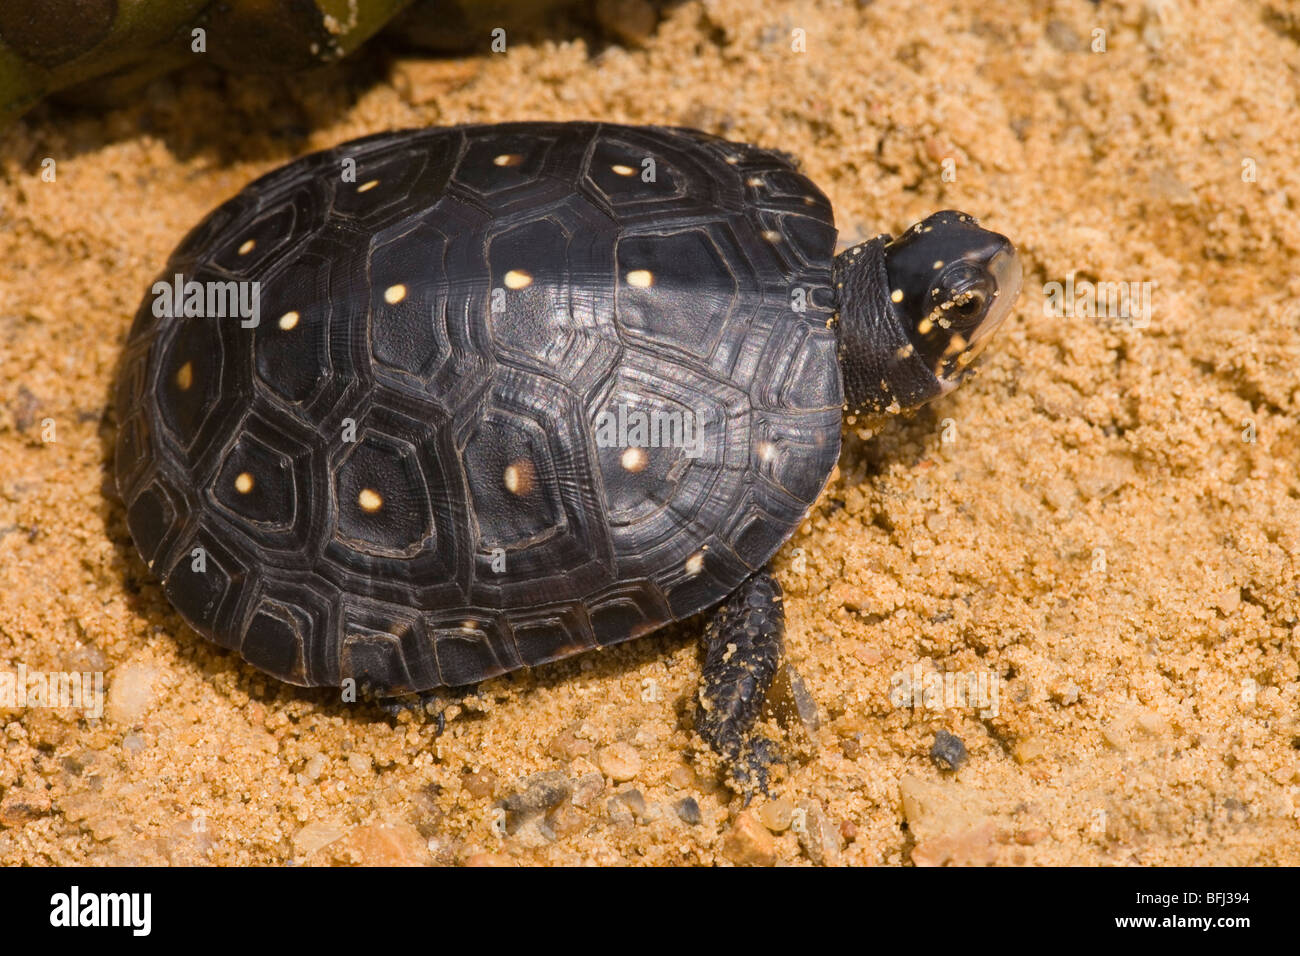 North American tortuga (Clemmys guttata). Distribución noreste de Estados Unidos de América. Foto de stock